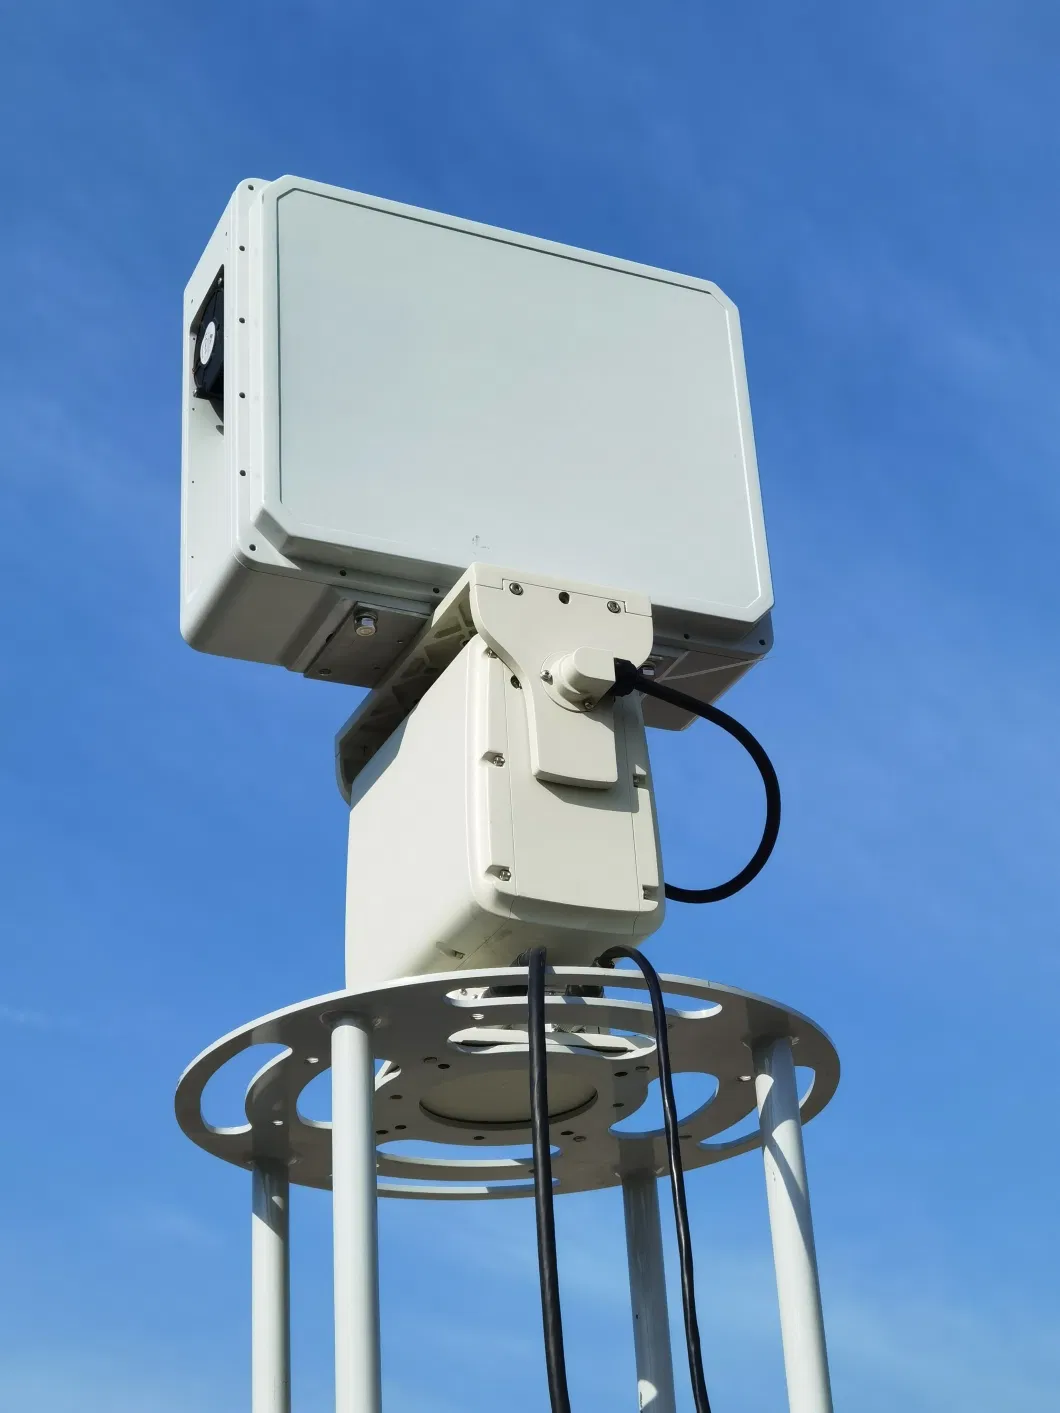 Radar Coastal Surveillance System for Ground Based and Air Surveillance Based Surveillance and Security